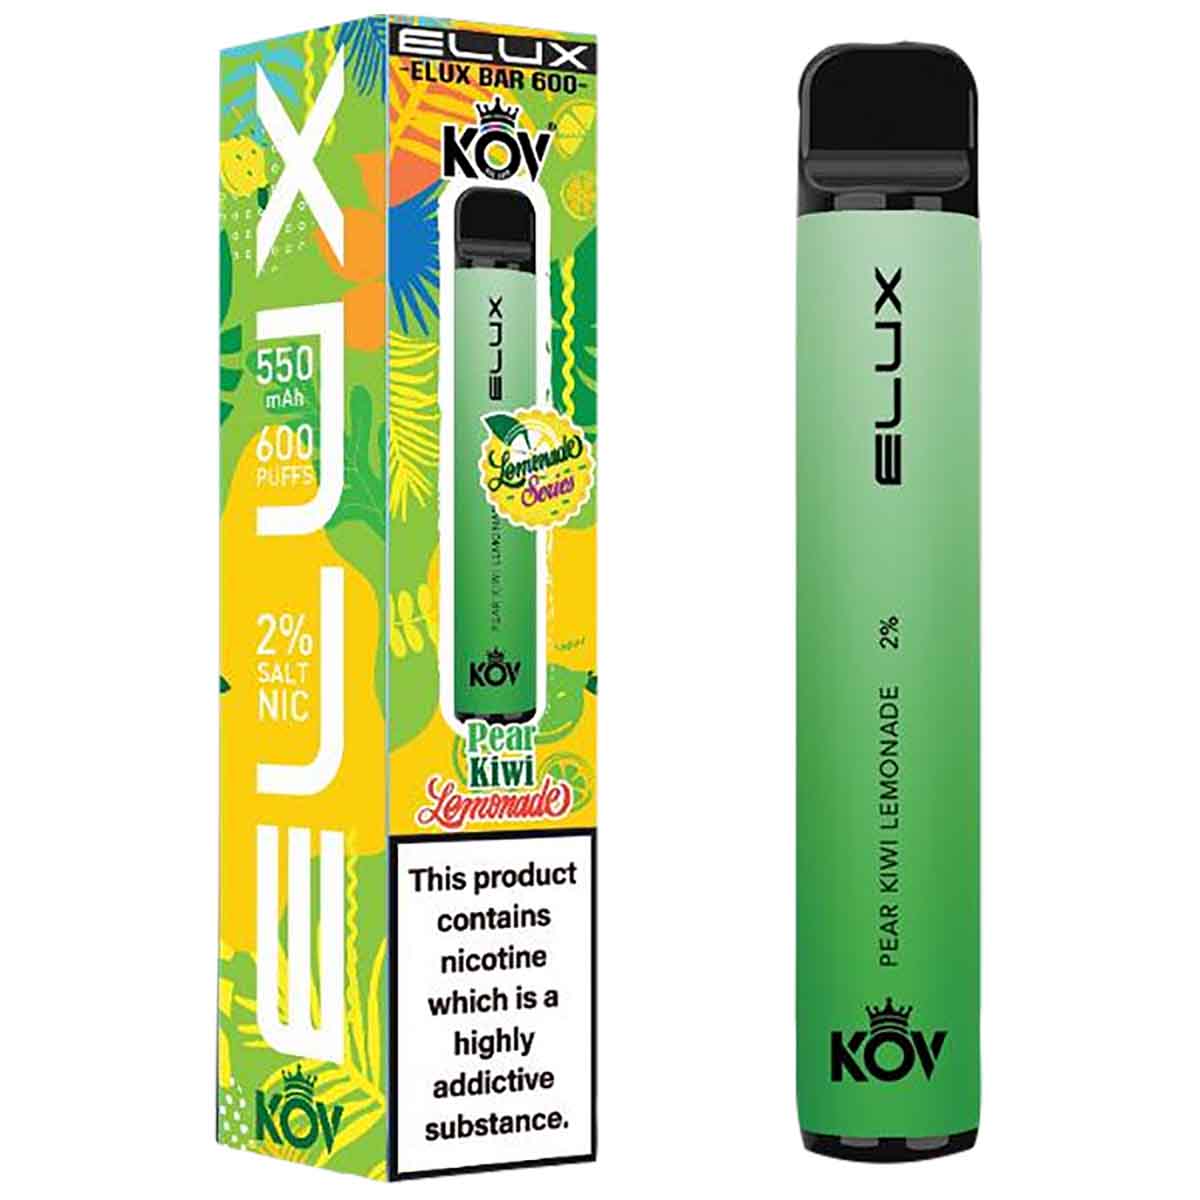 Elux Bar 600 Lemonade Range Disposable Vape Device - Pear Kiwi Lemonade